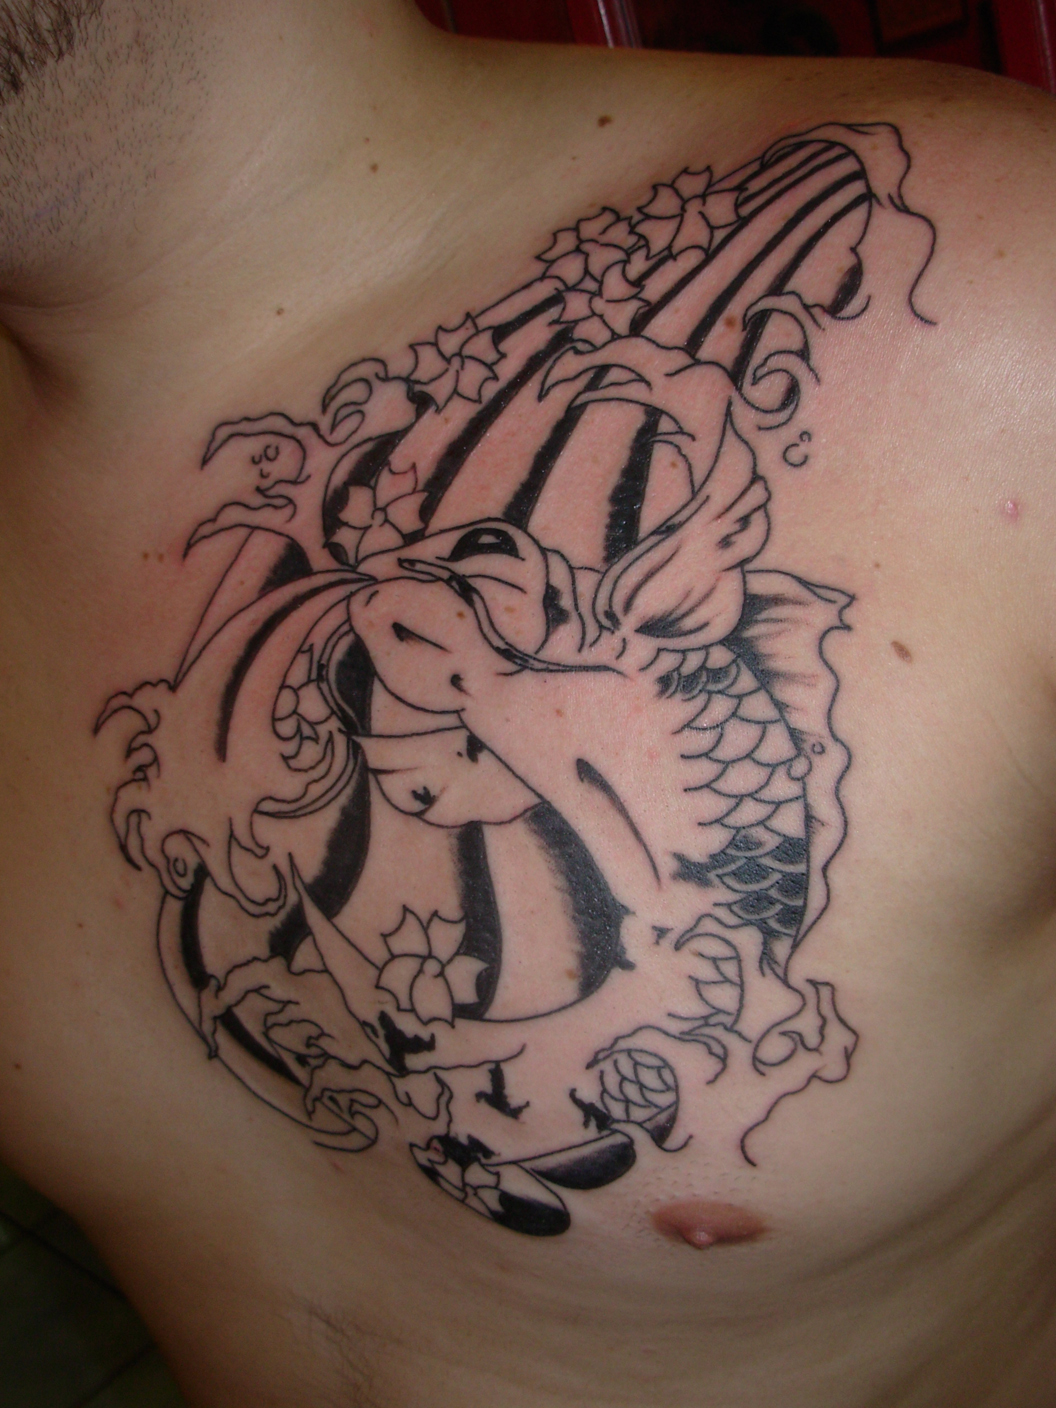 http://4.bp.blogspot.com/-Gi2uvYdwgAM/Tddtr88BEqI/AAAAAAAABAU/fPcUPI8fMNI/s1600/Koi-tattoo+design.jpg